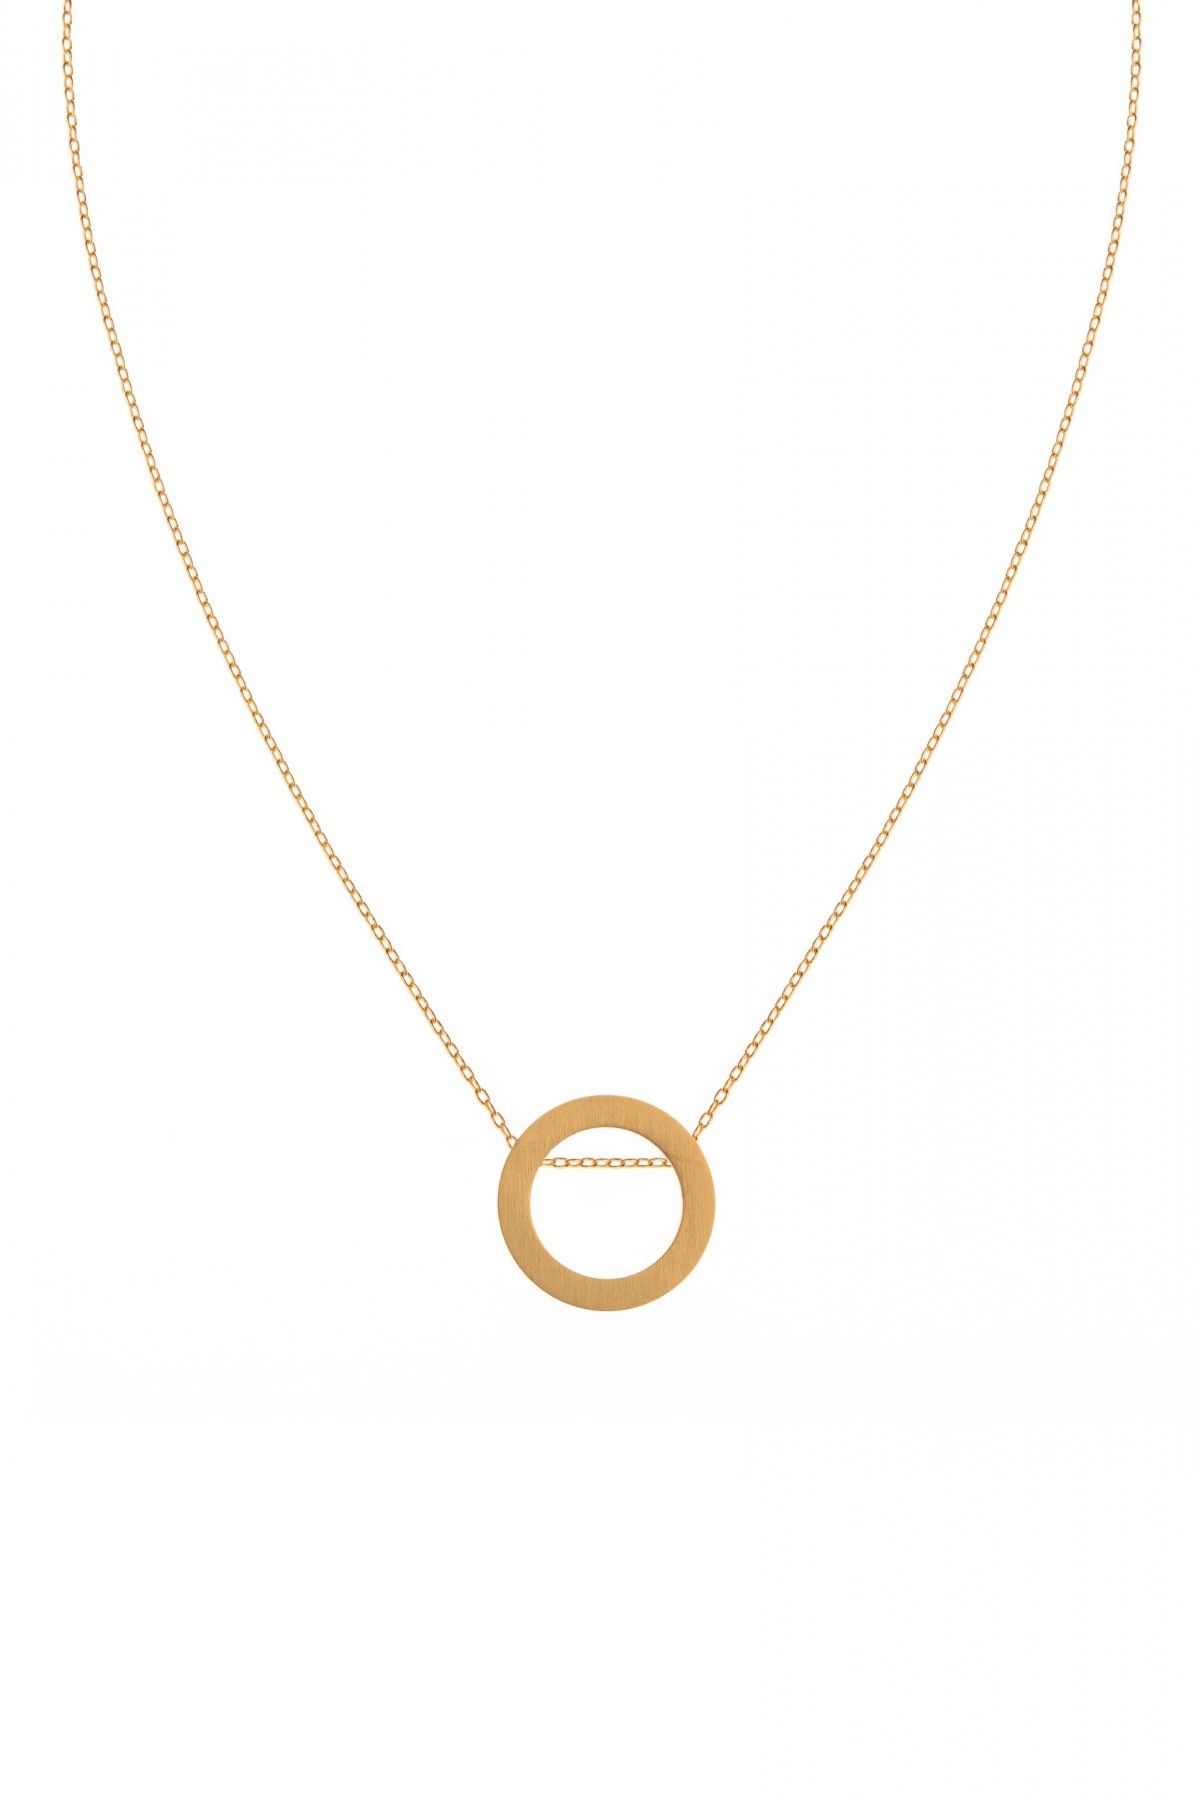 Circle Line Necklace